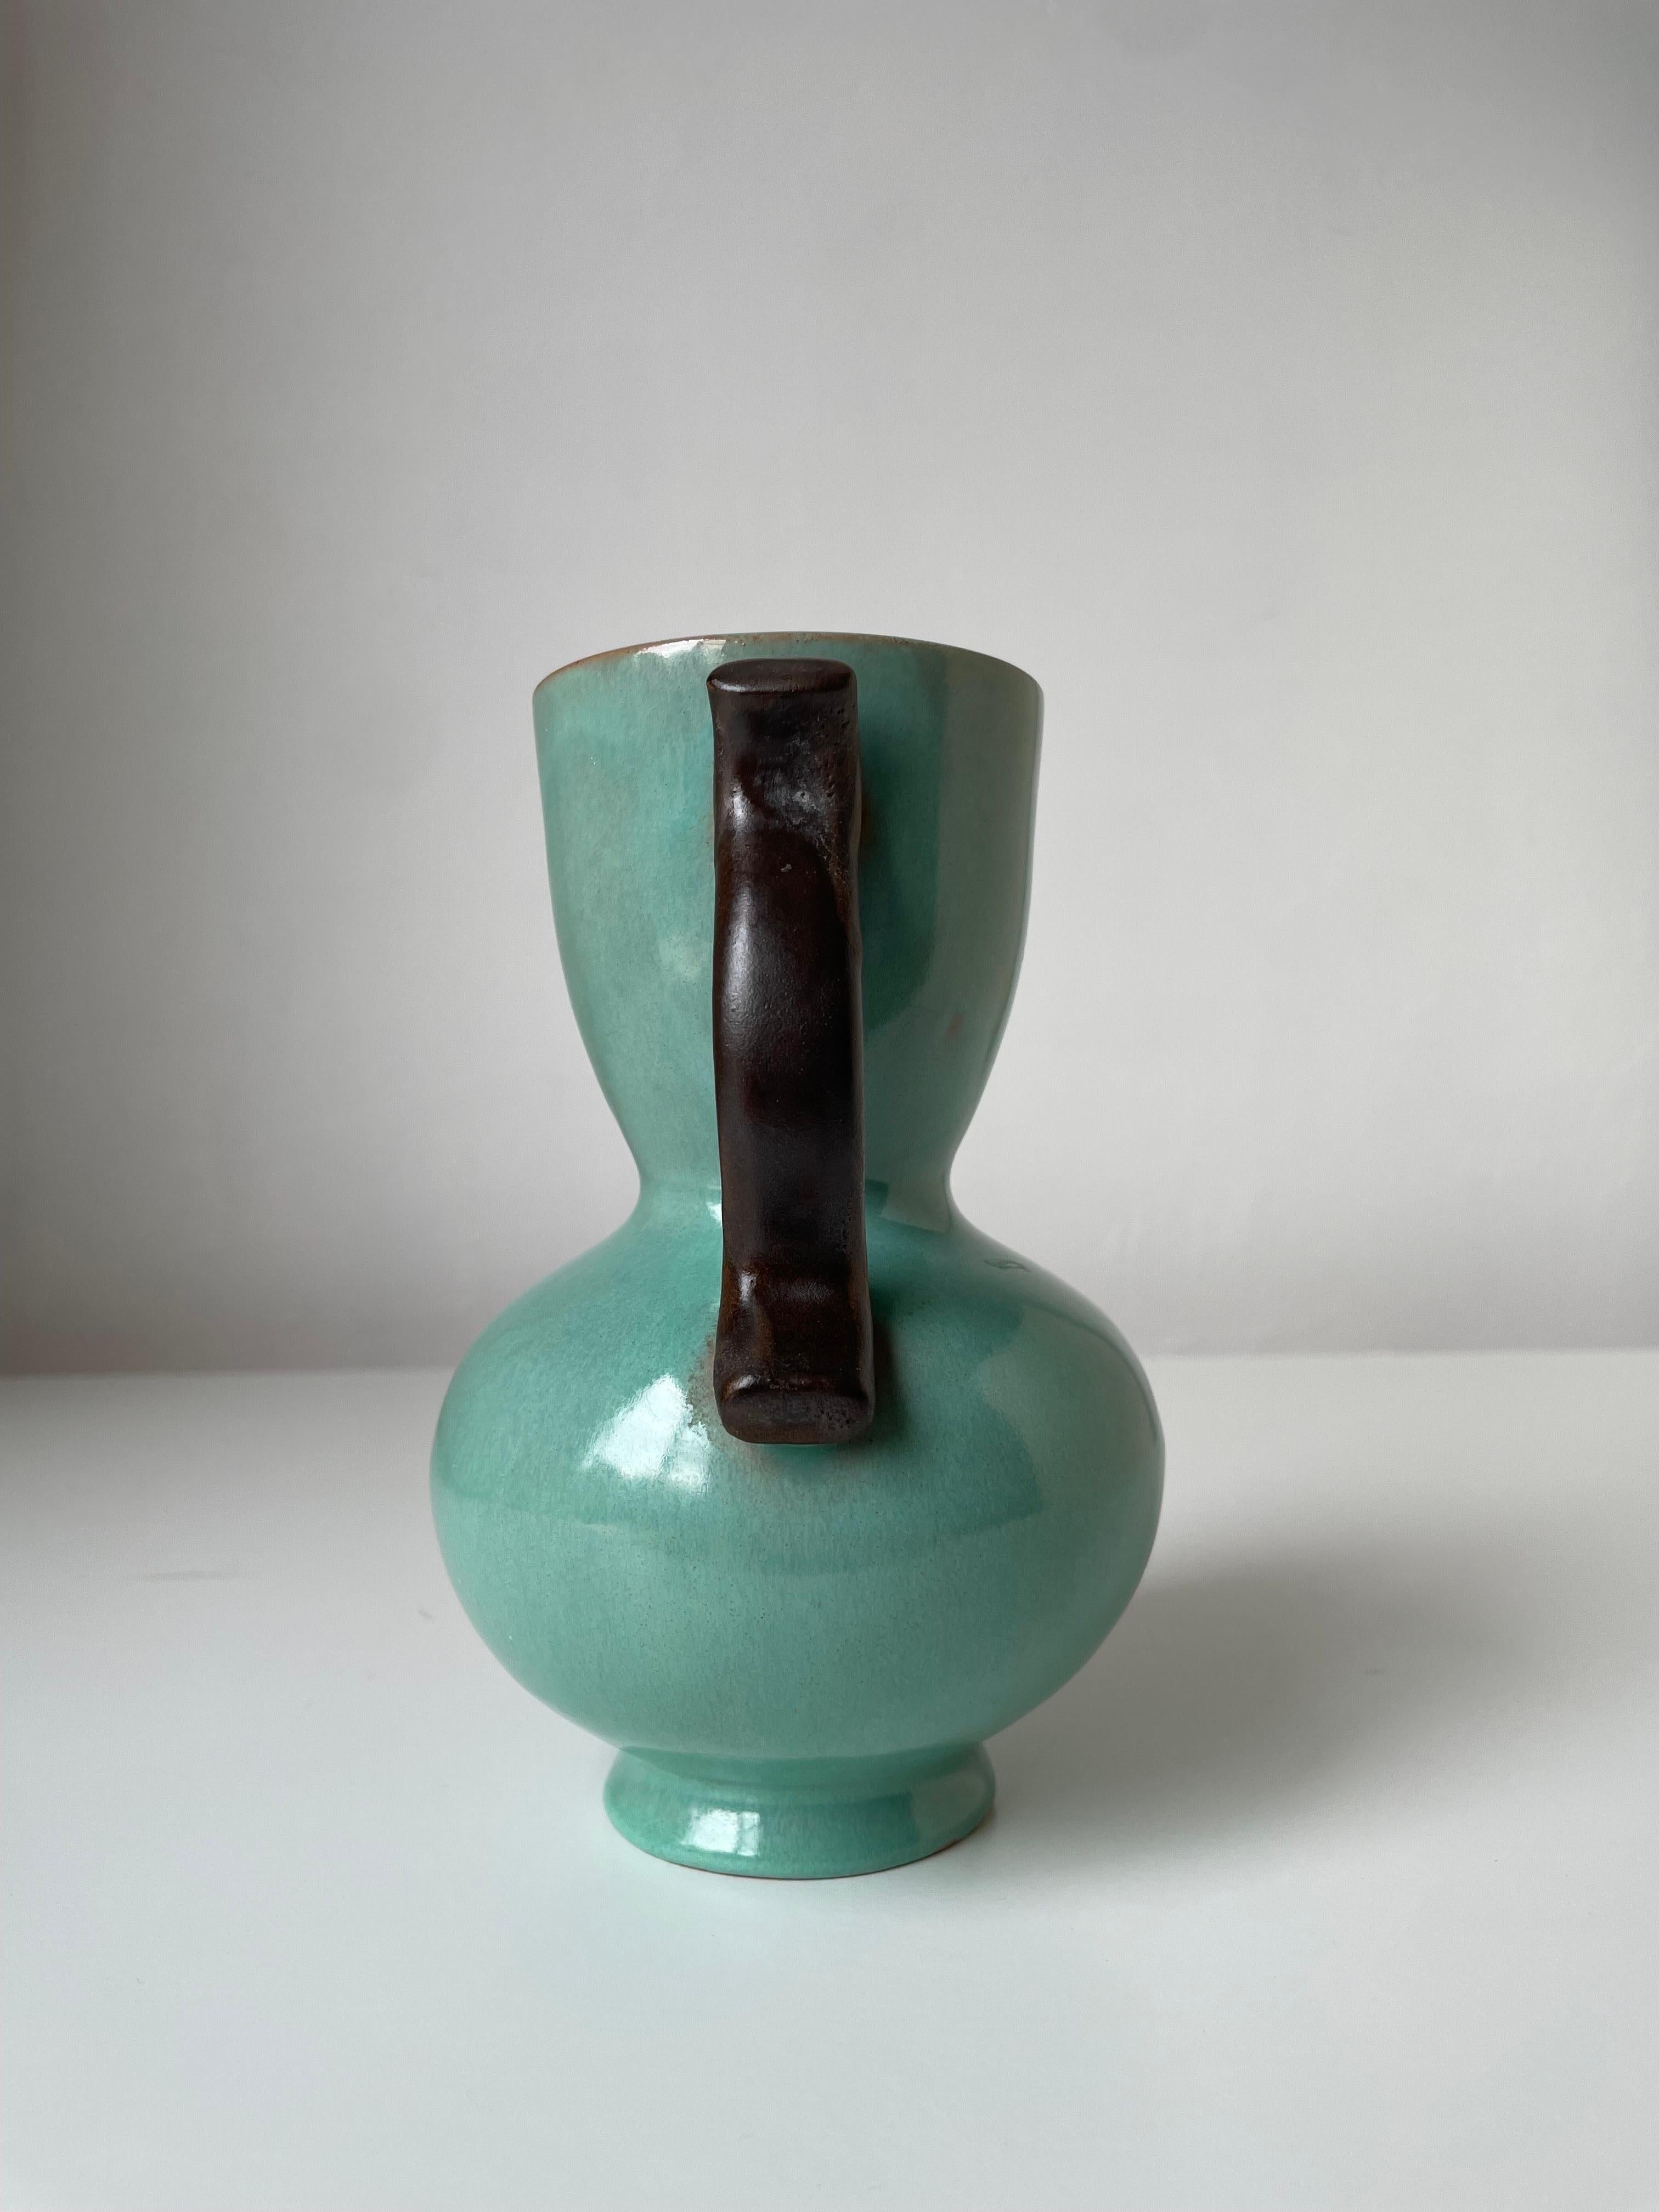 Glazed Anna-Lisa Thomson 1940s Green Ceramic Vase, Upsala Ekeby, Sweden For Sale